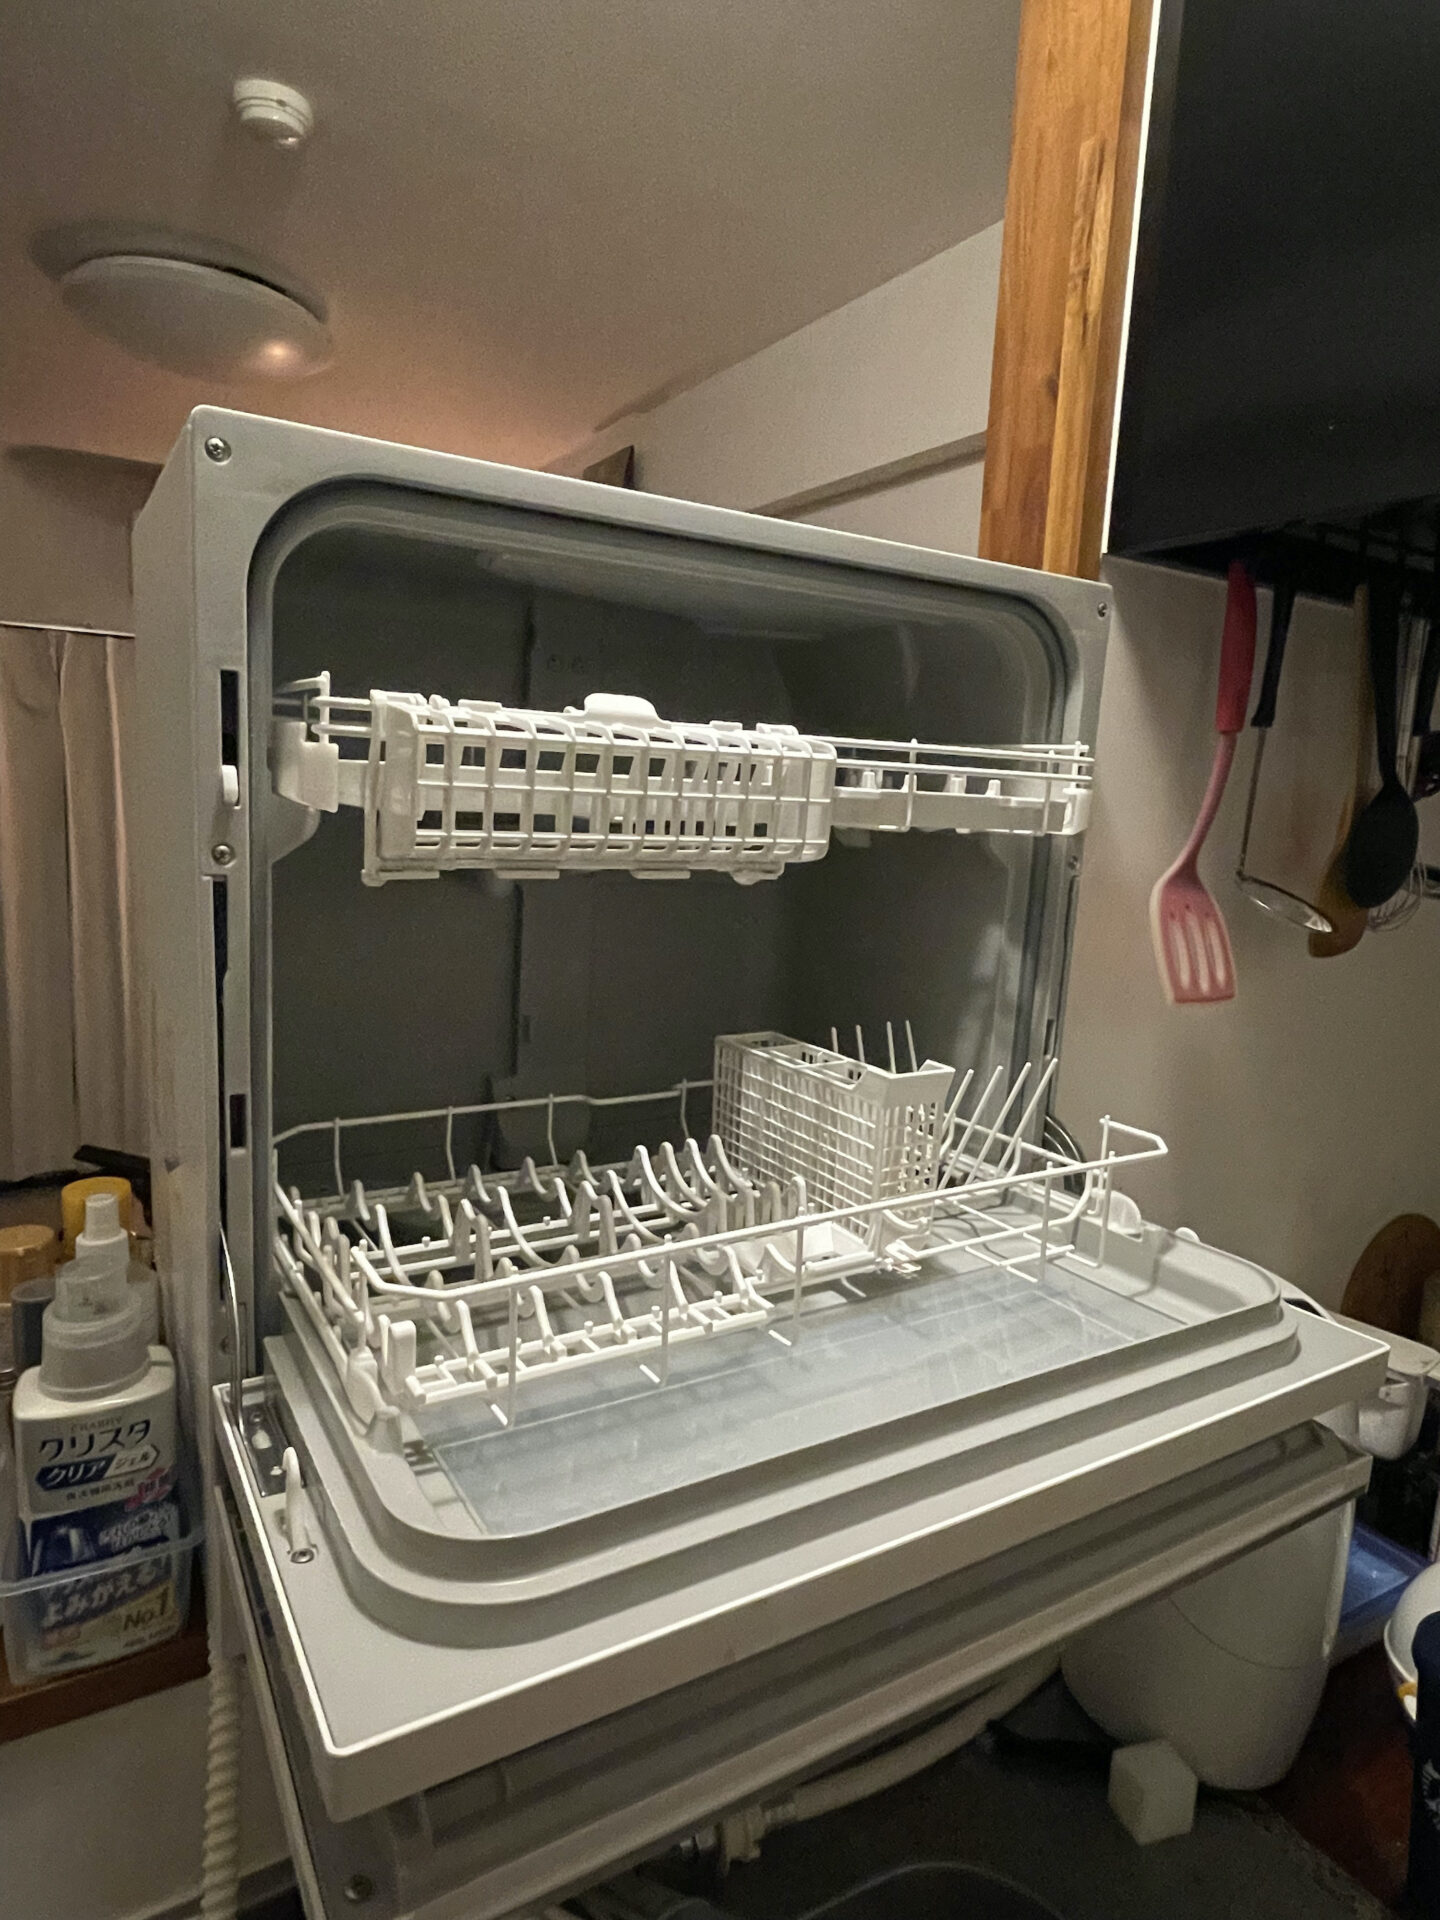 NP-TZ200】食洗機を導入してのメリット・デメリット | アキブログ